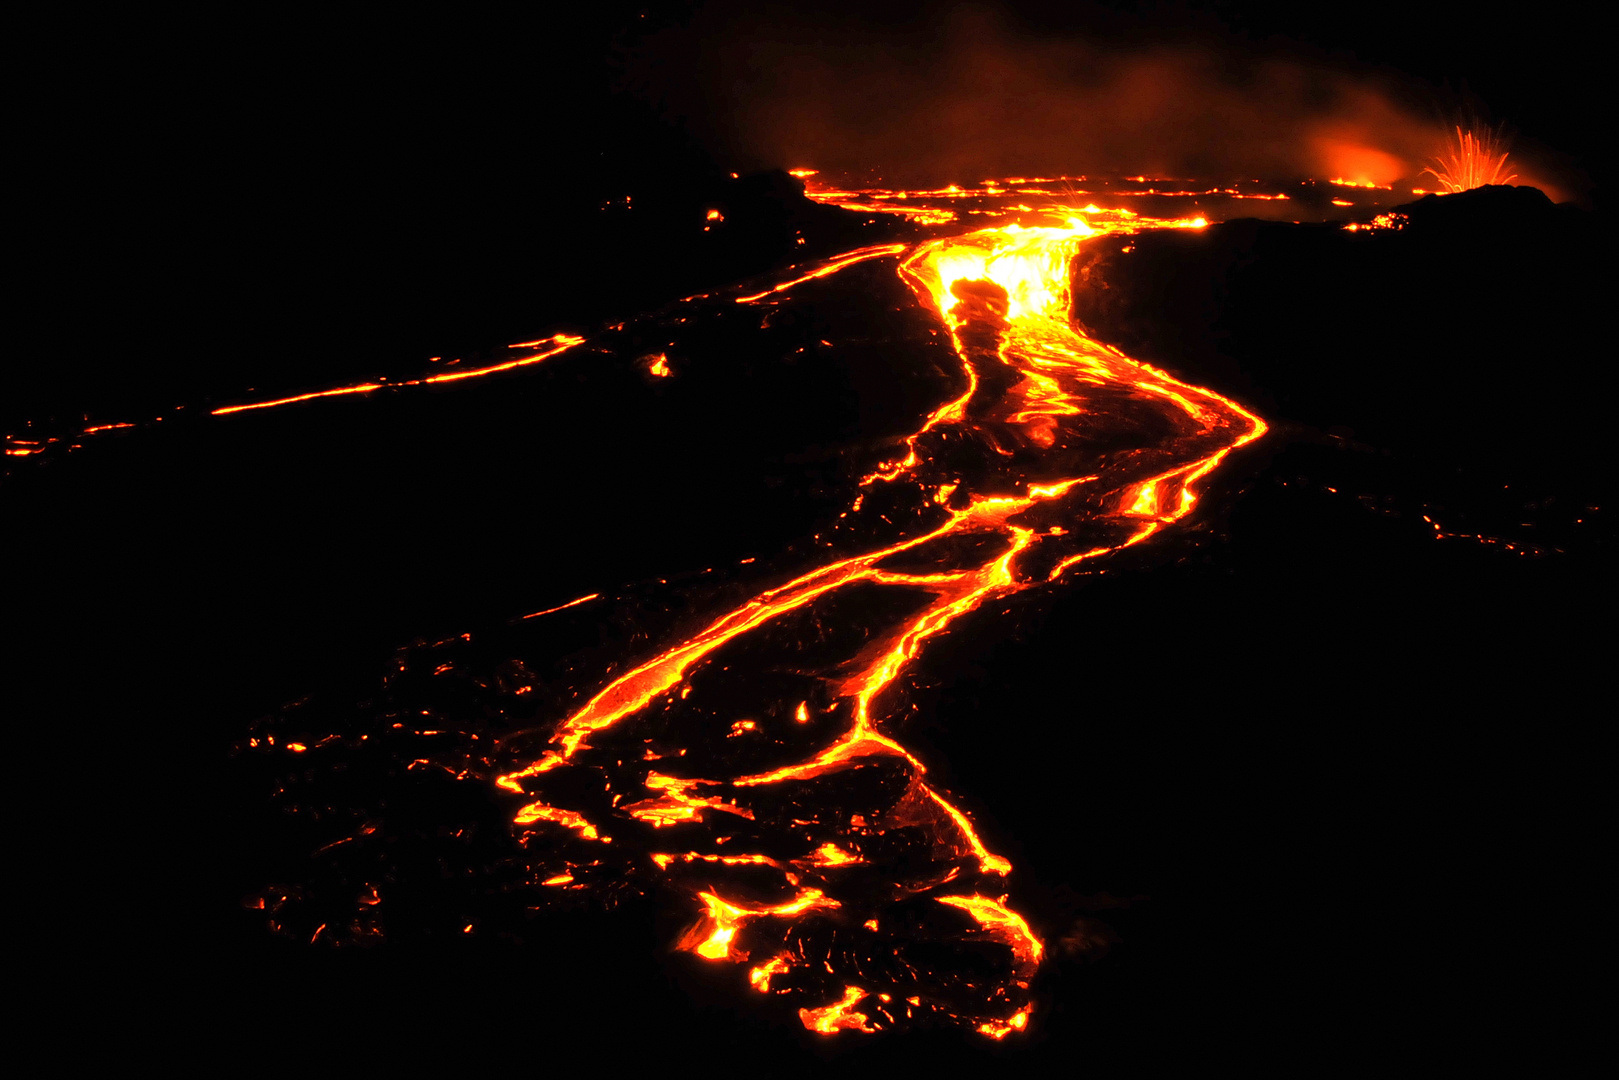 Lavastrom am Vulkan Erta Ale (Der Feuerberg in der Danakil-Wüste)